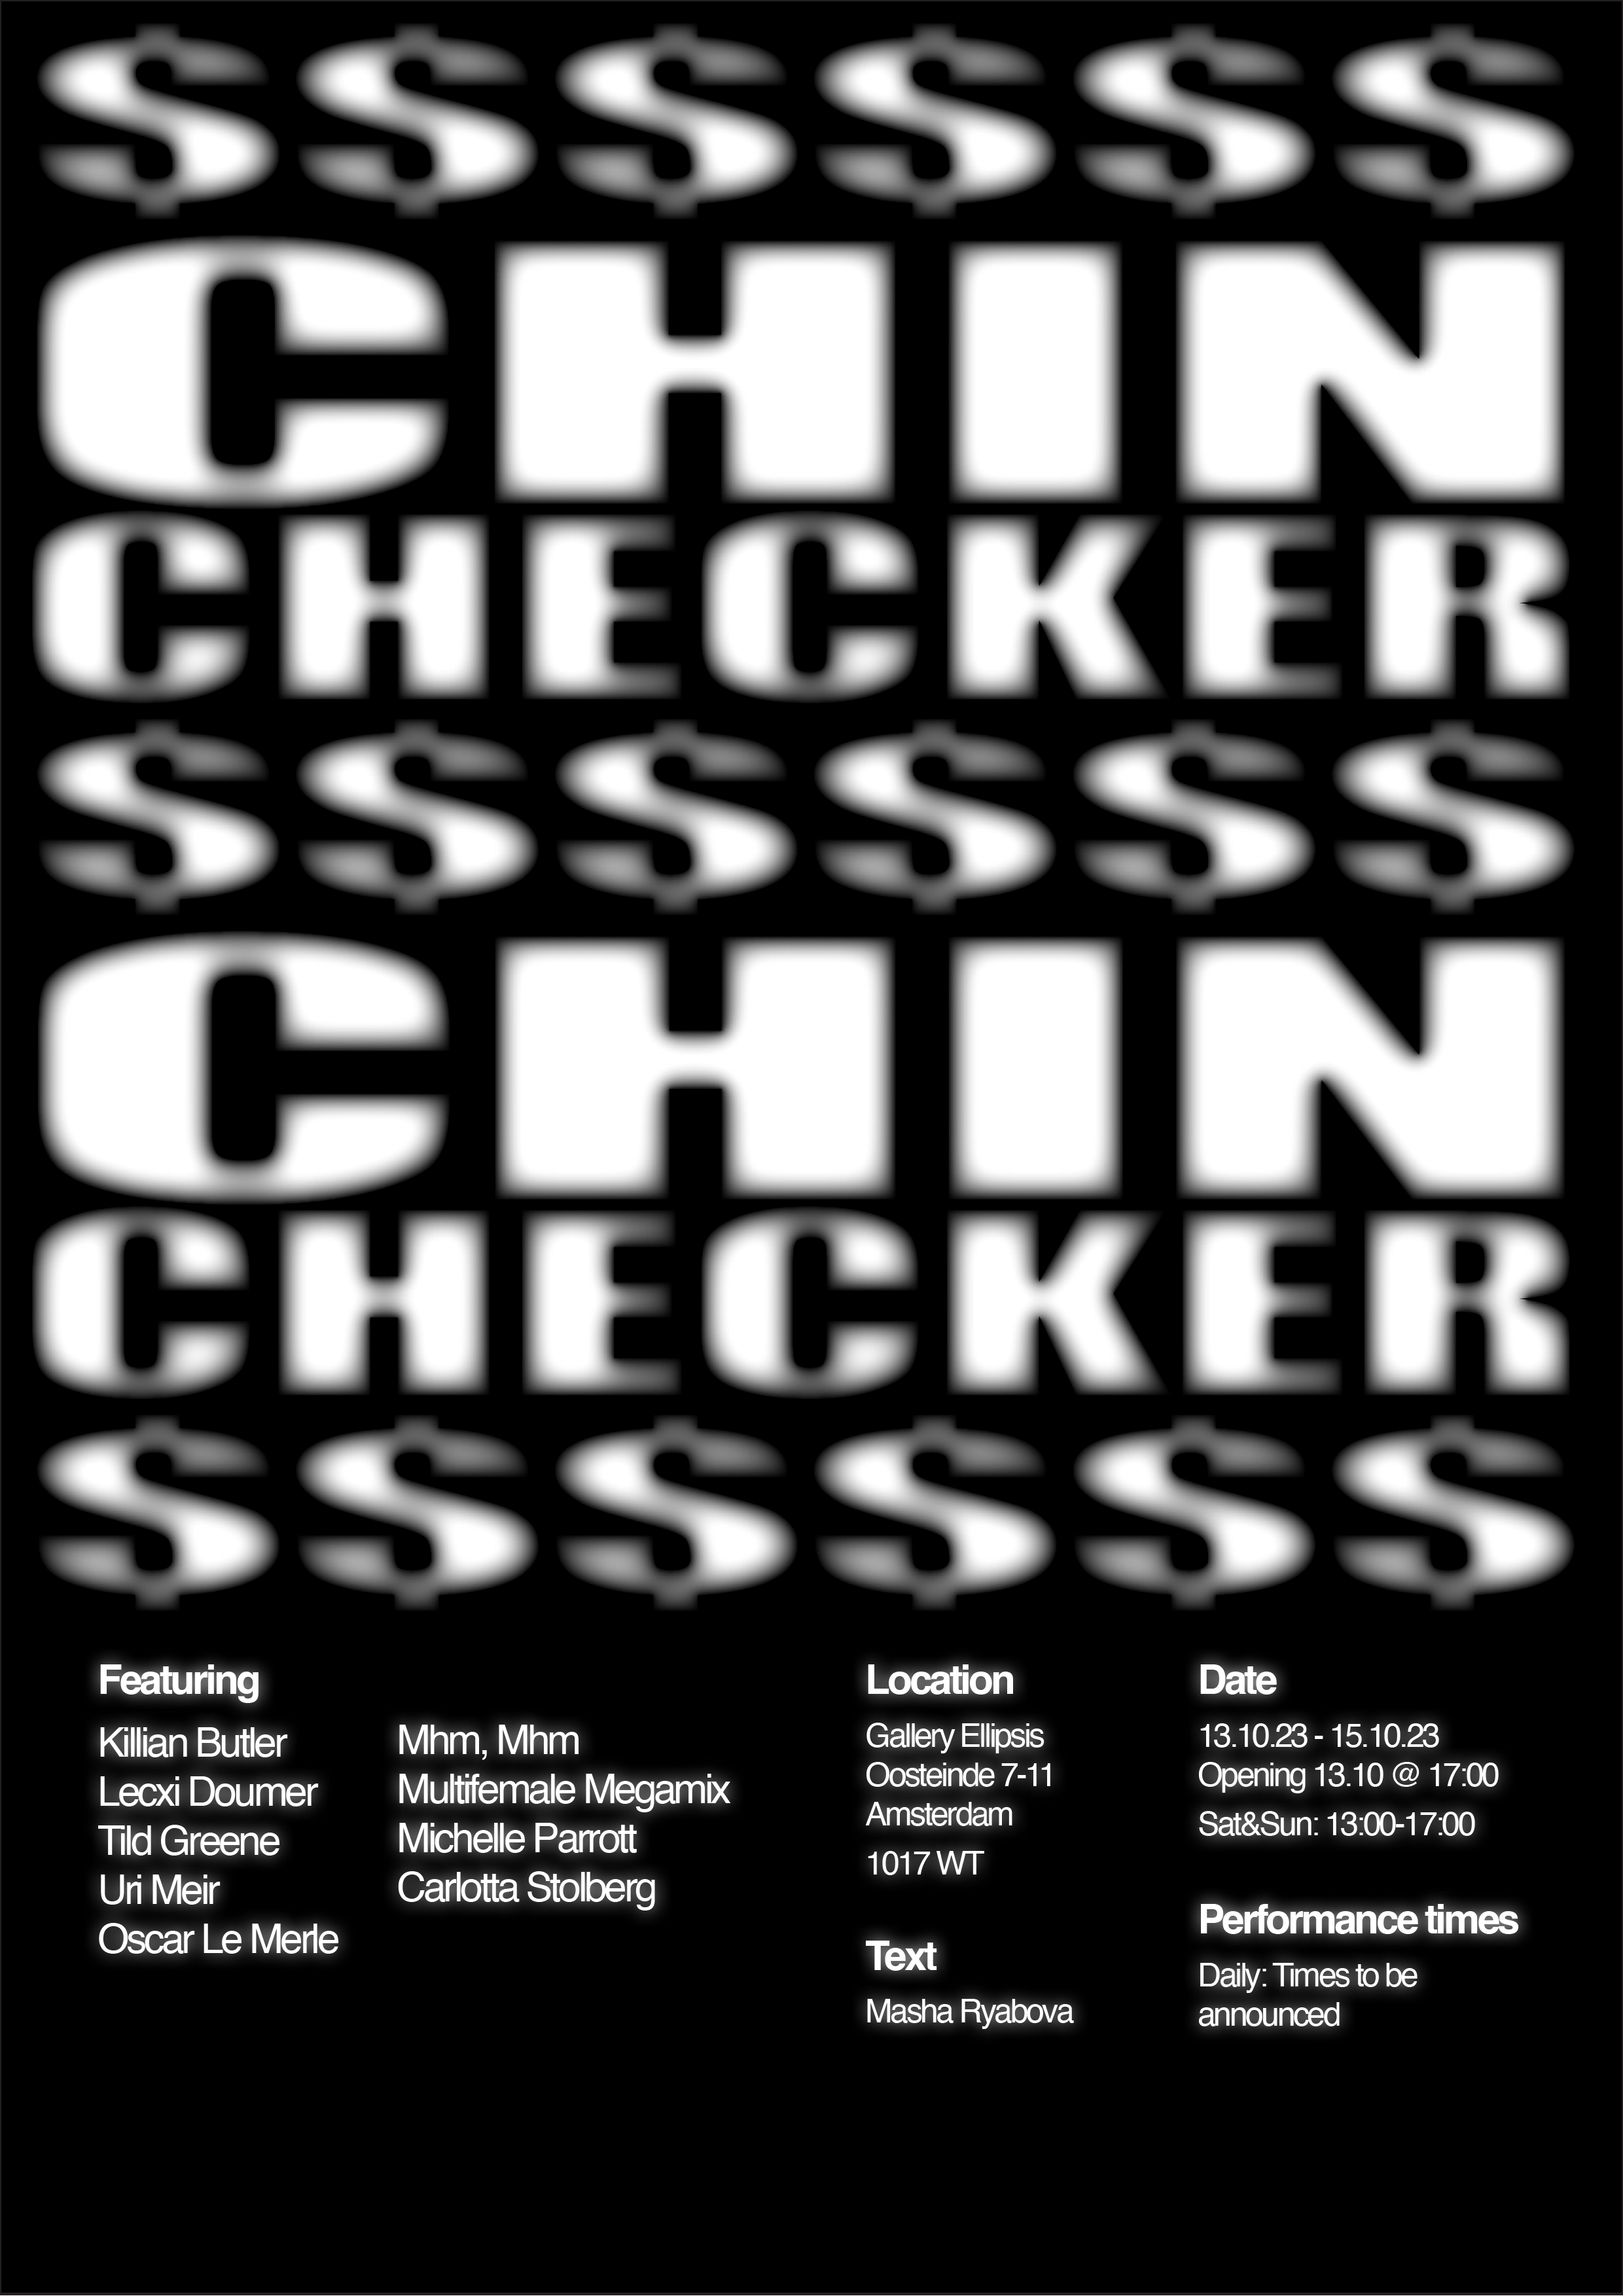 Chin checker